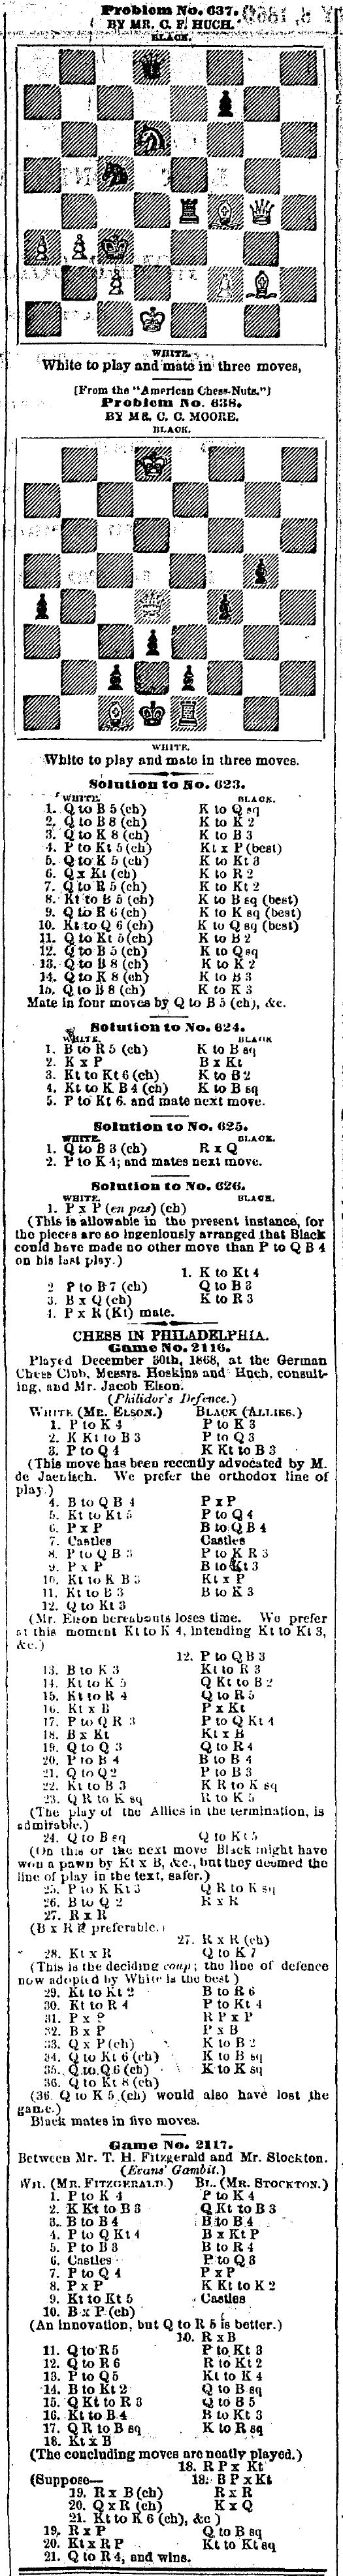 1869.01.08-02 Philadelphia Daily Evening Bulletin.jpg